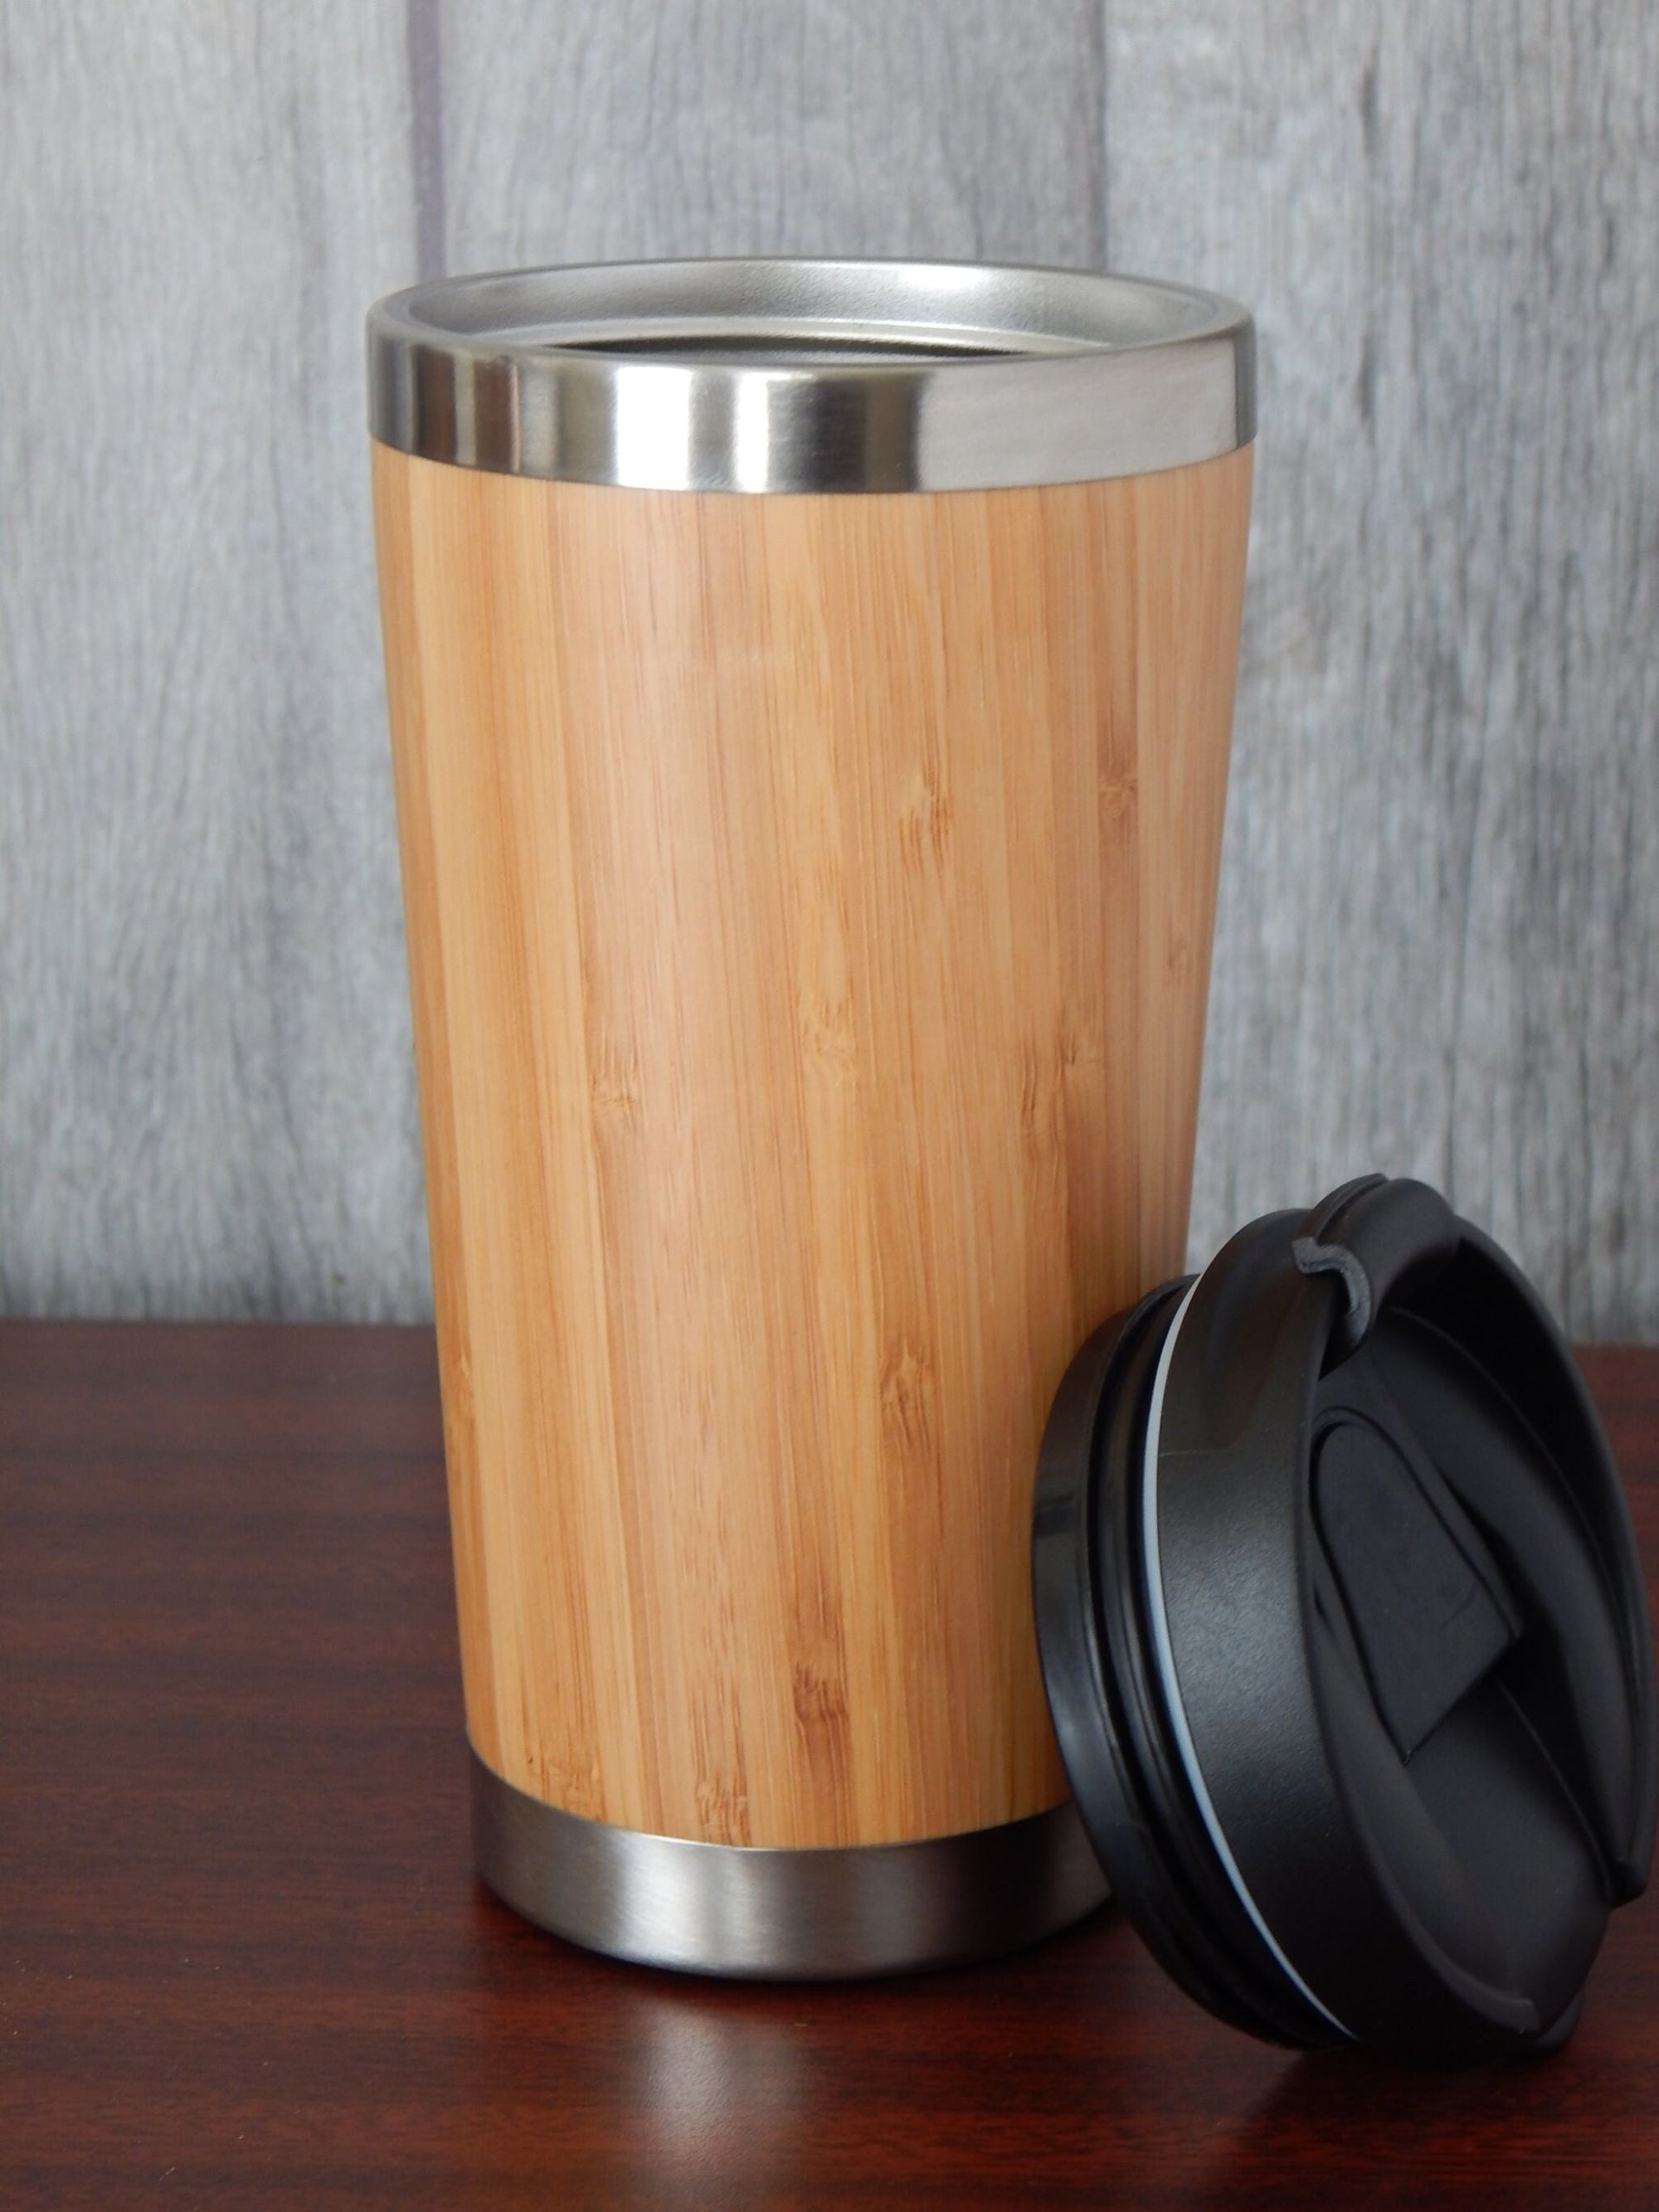 Apple Tumbler Gift for Teacher | Teachers personalized Travel Coffee Mug